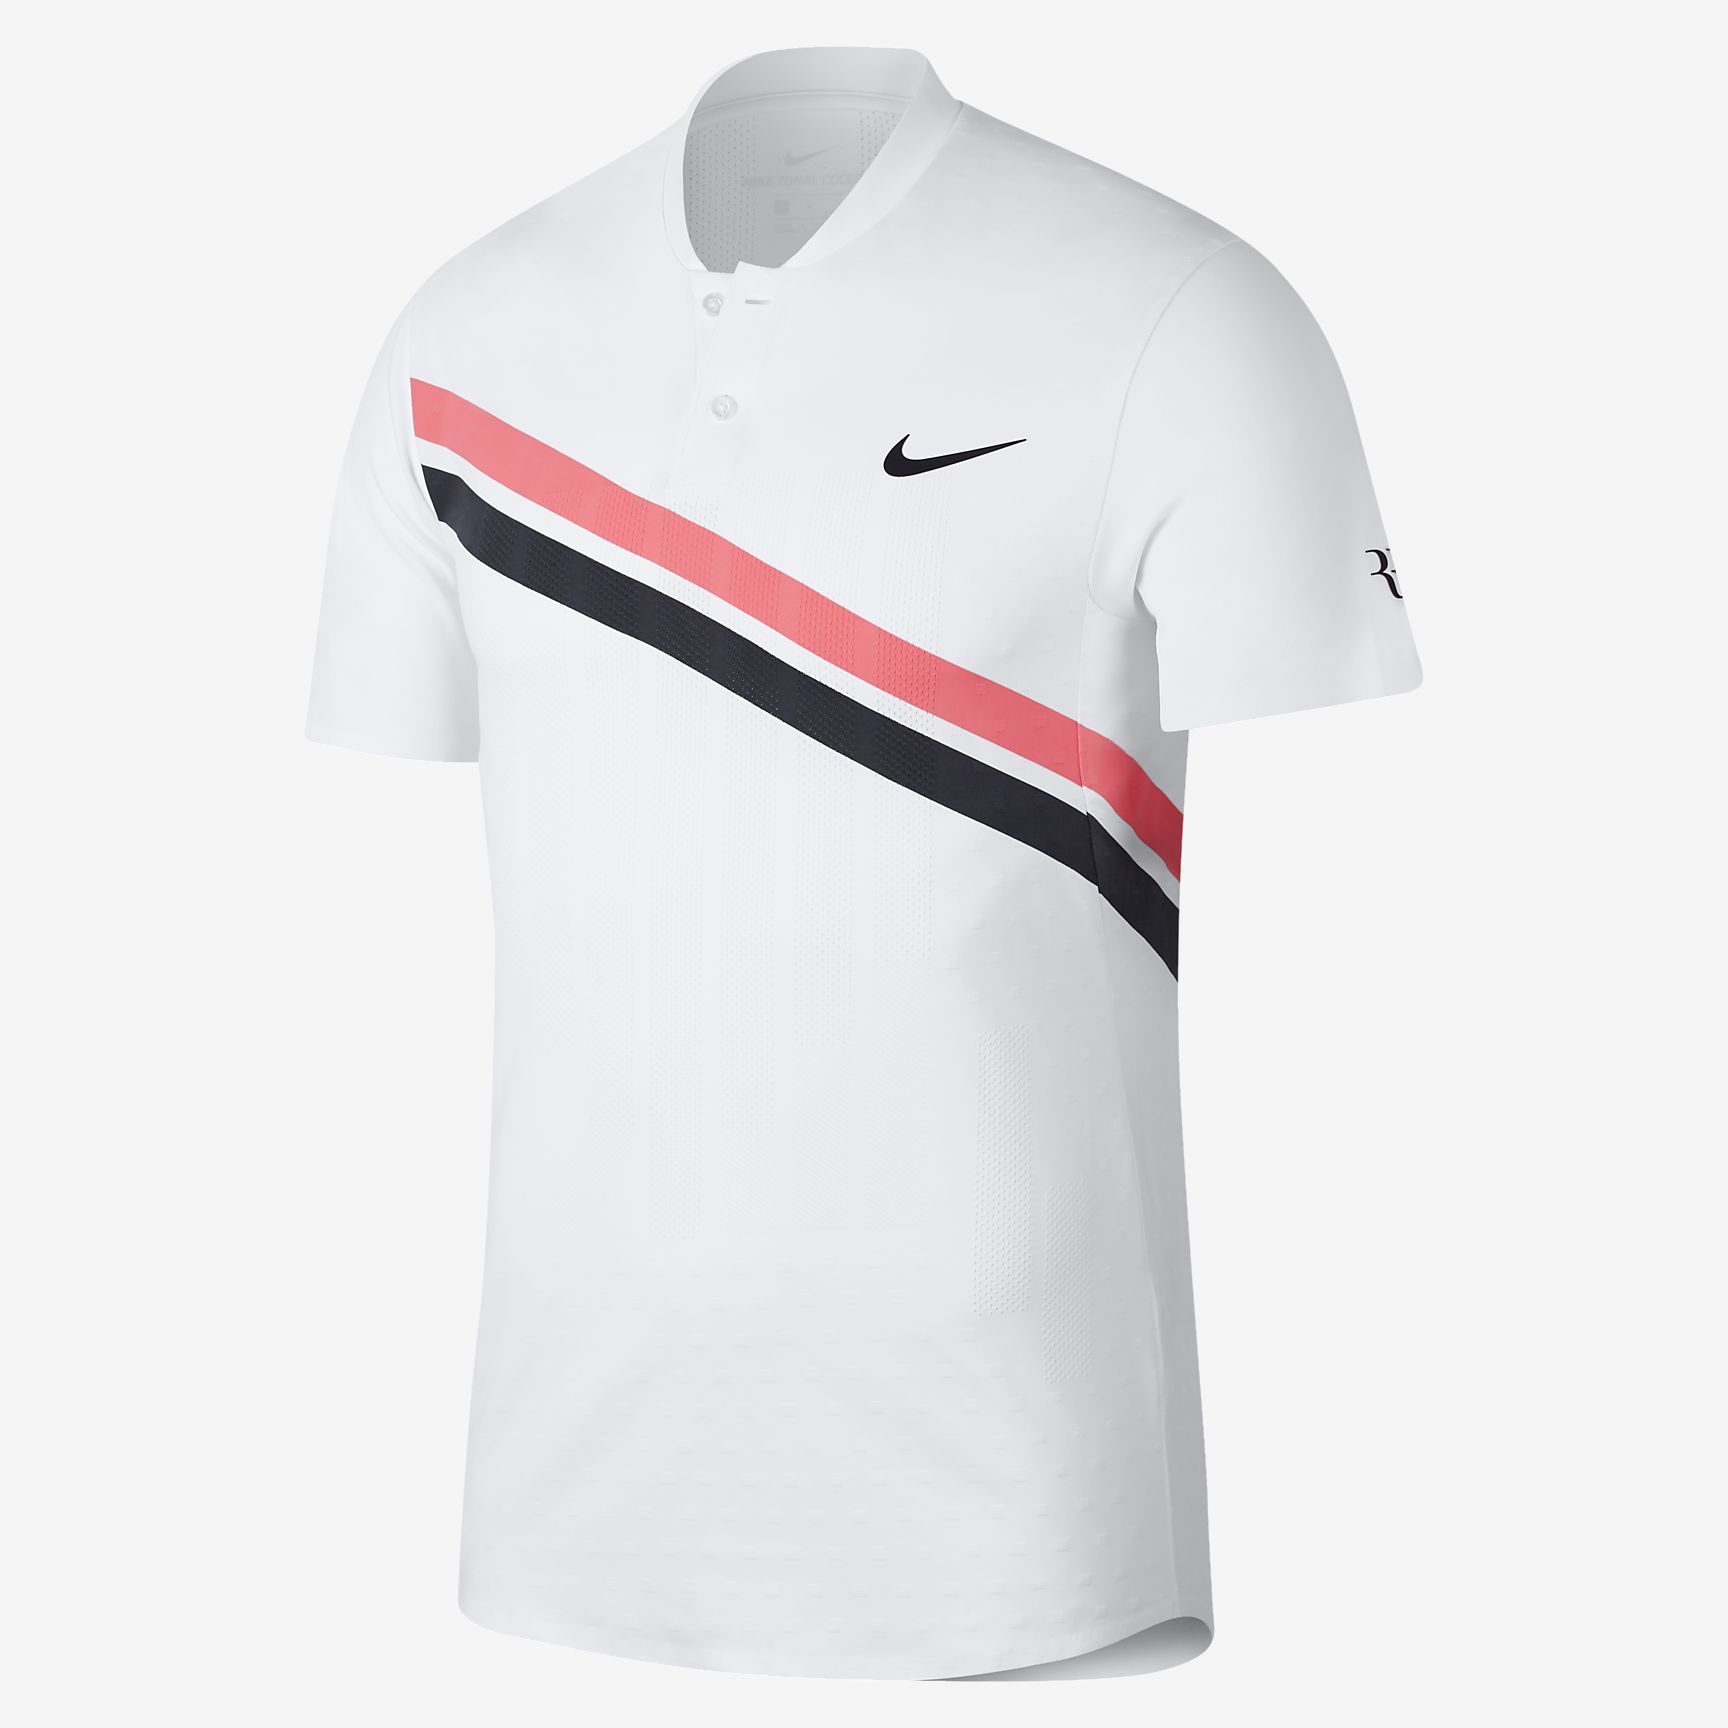 Roger Federer 2018 Australian Open NikeCourt Zonal Cooling RF Advantage - Roger Federer 2018 Australian Open Nike Outfit